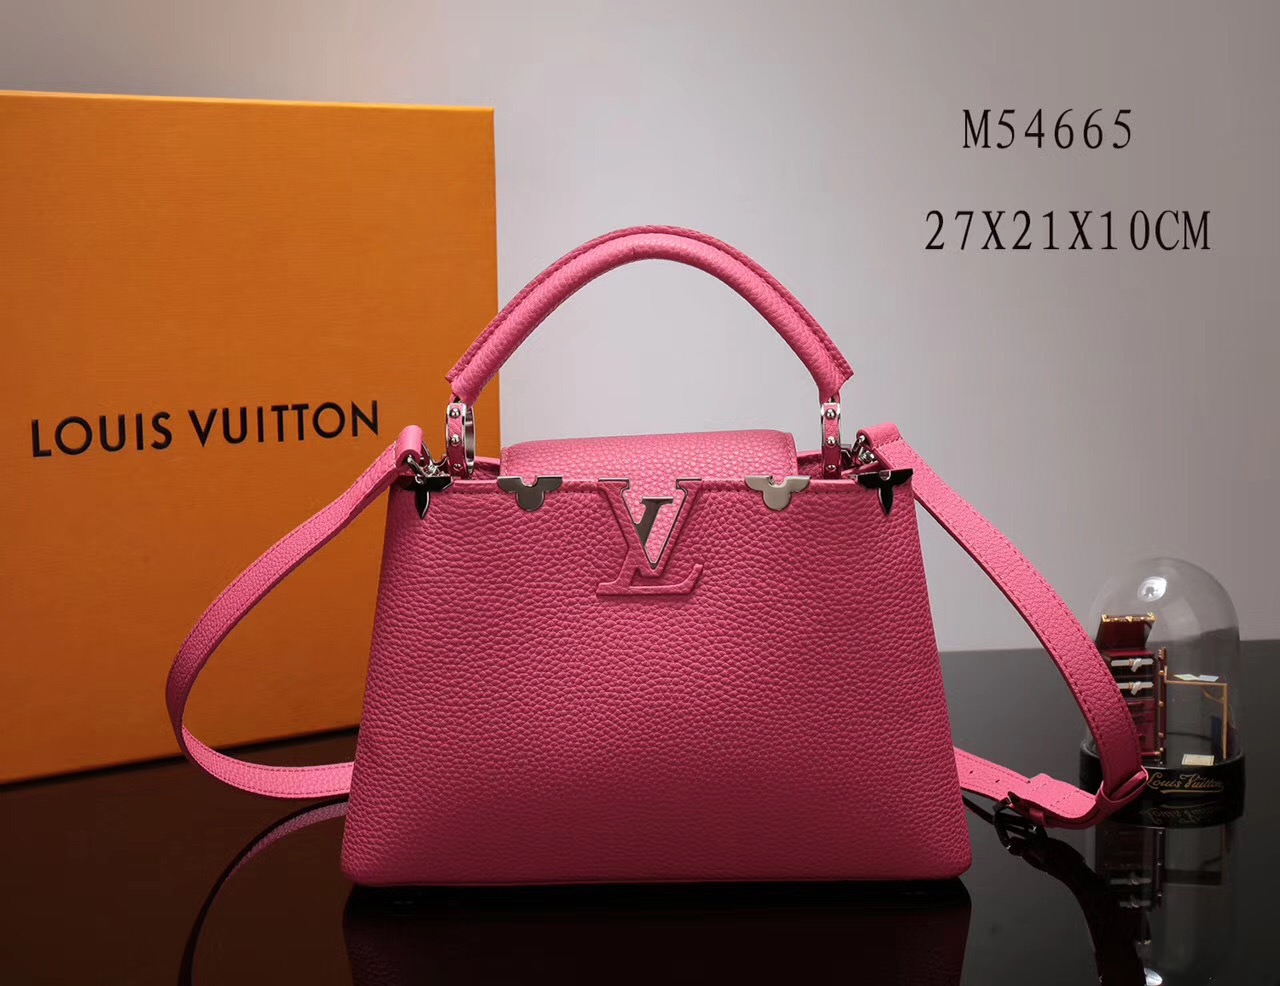 LV Louis Vuitton Small Capucines Leather Handbags M54665 bags Pink [LV1053] - $379.00 : Luxury Shop